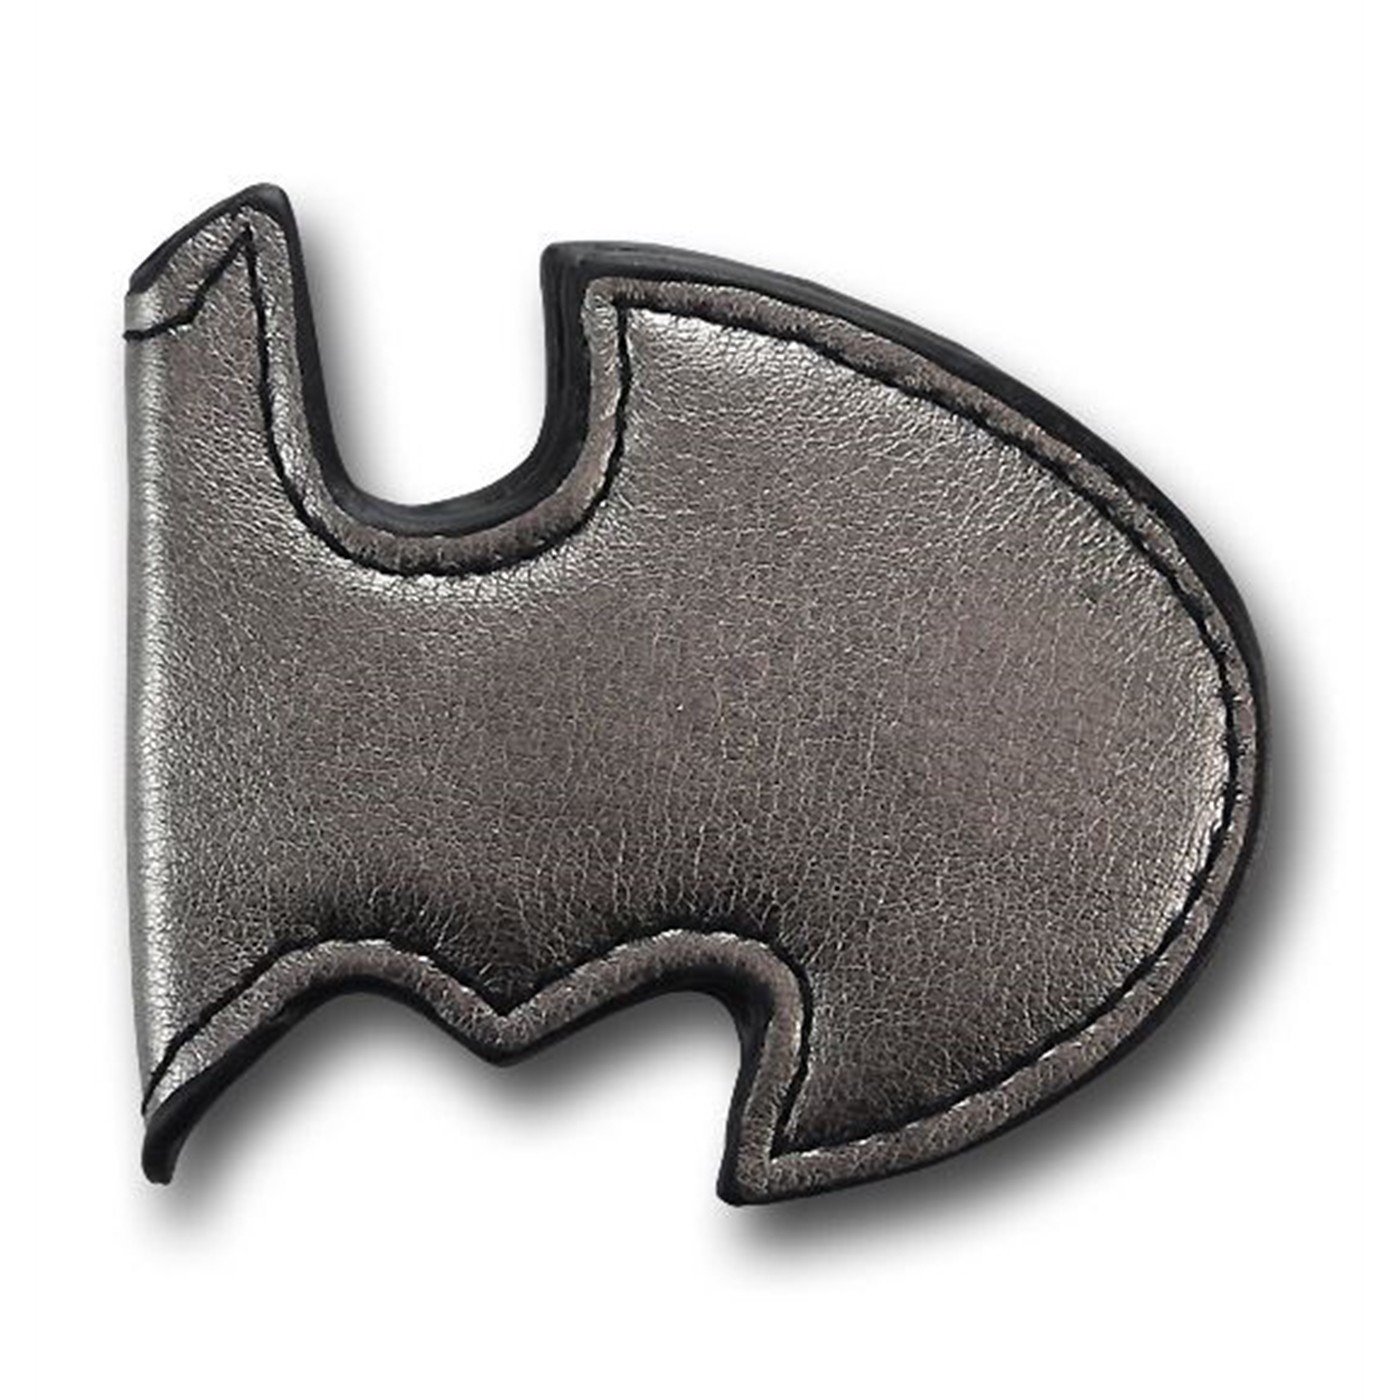 Batman Symbol Black Leather Money Clip